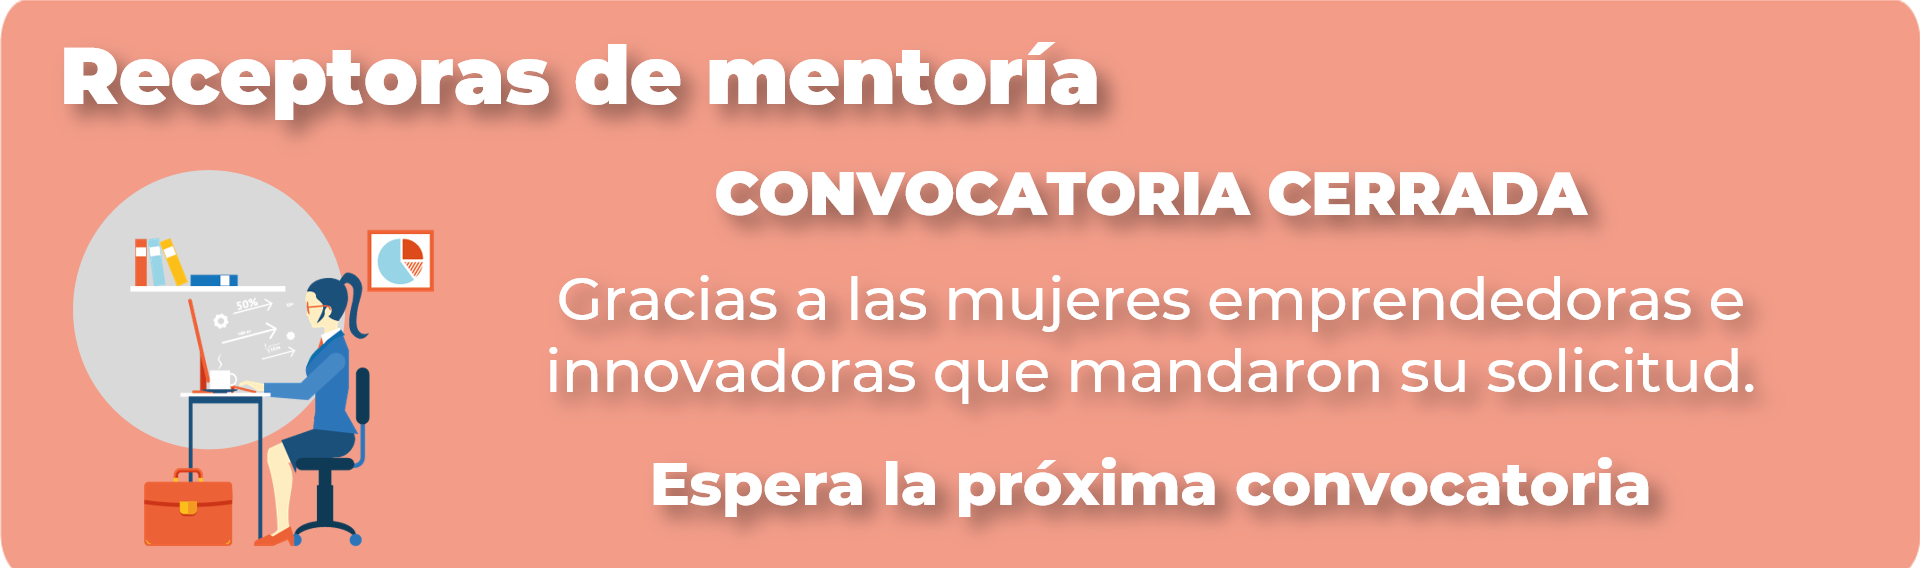 12.2 Cuerpo Aplicación a mentoria.png